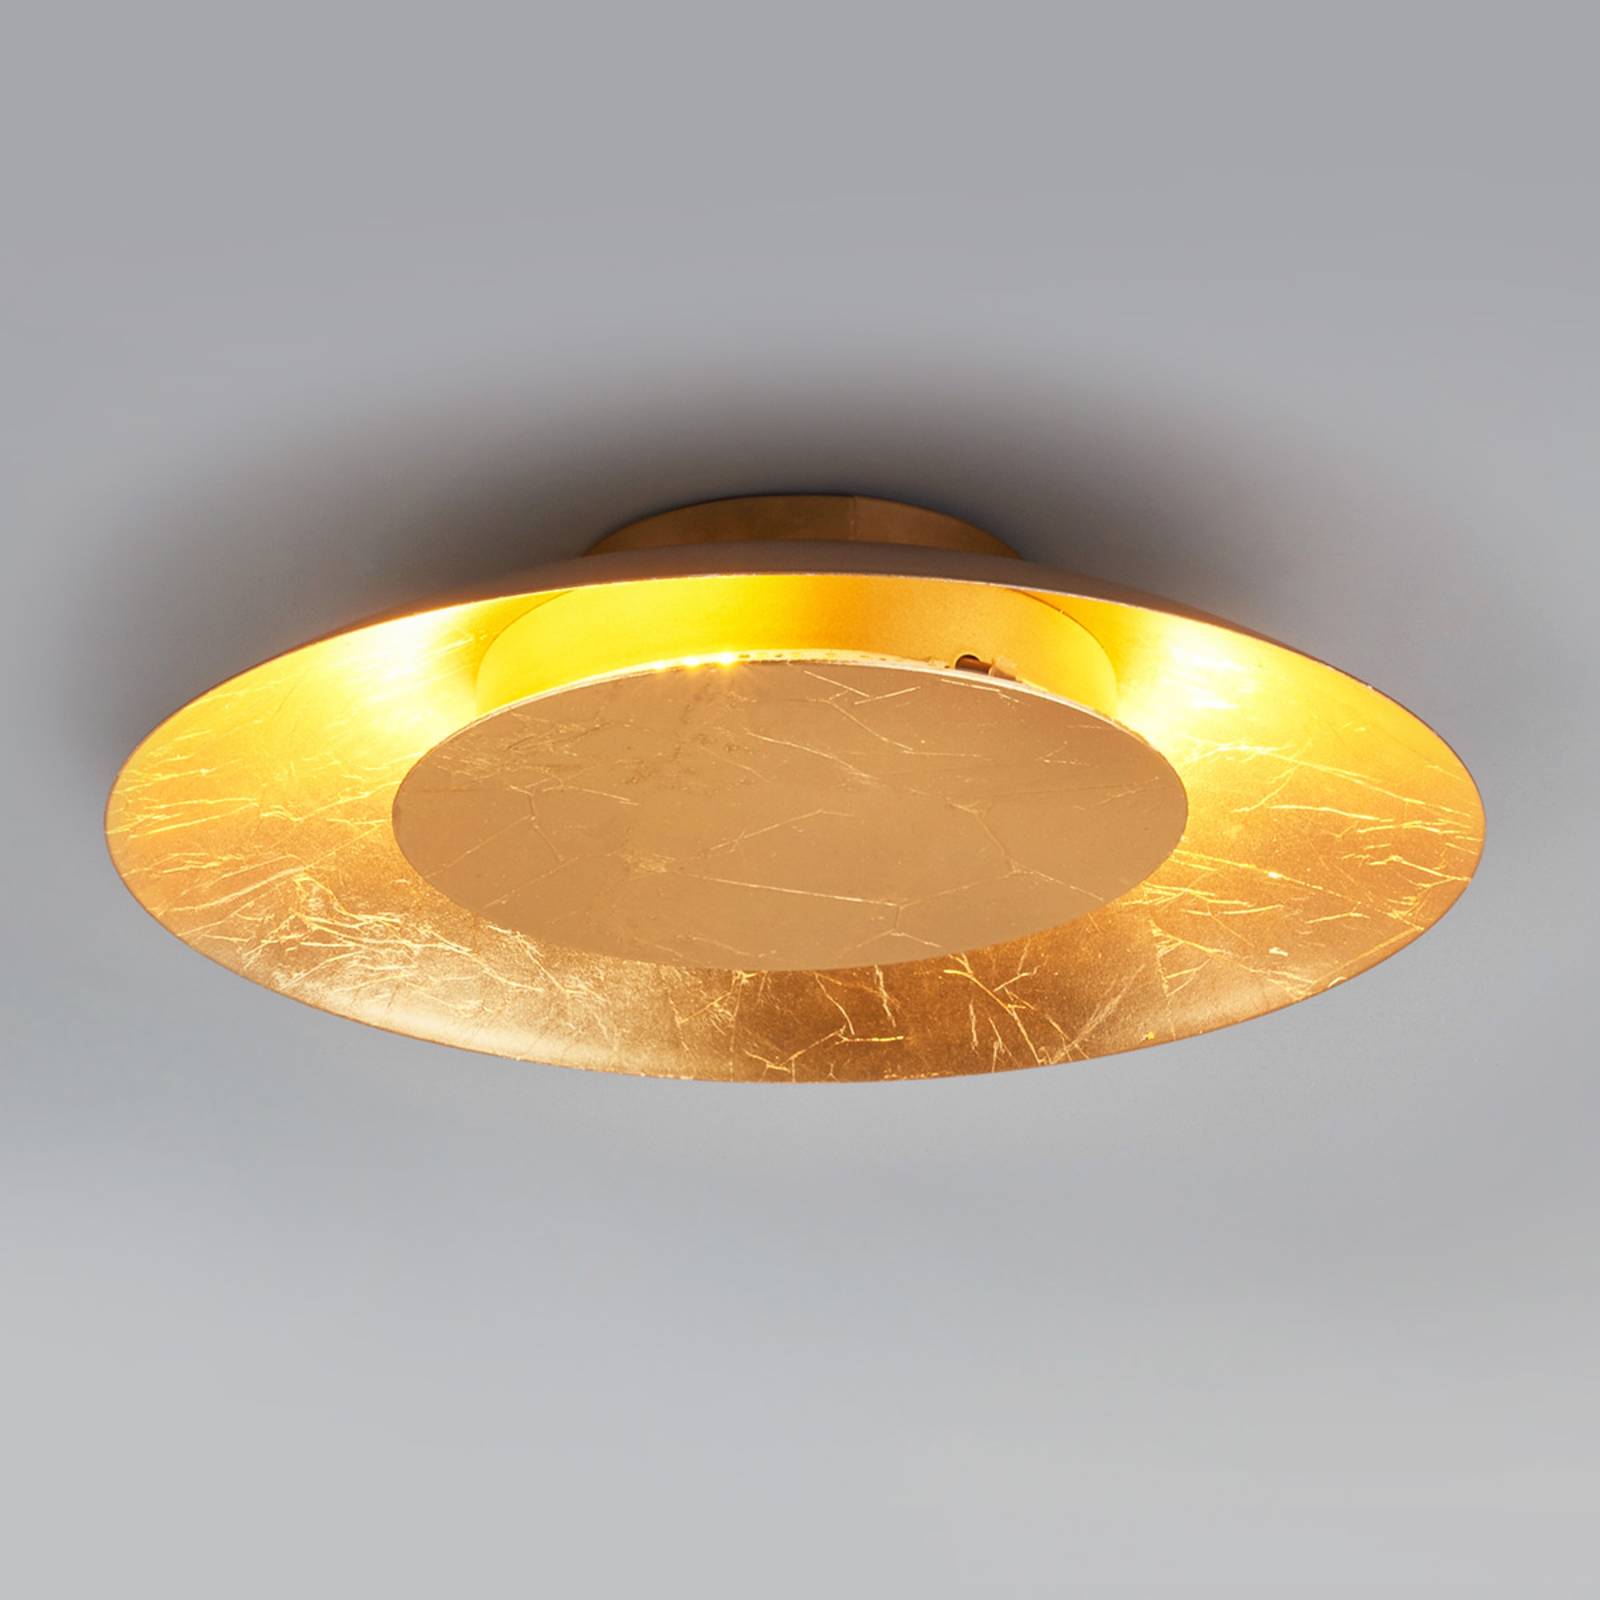 LED-kattolamppu Keti, kultaoptiikka, Ø 34,5 cm